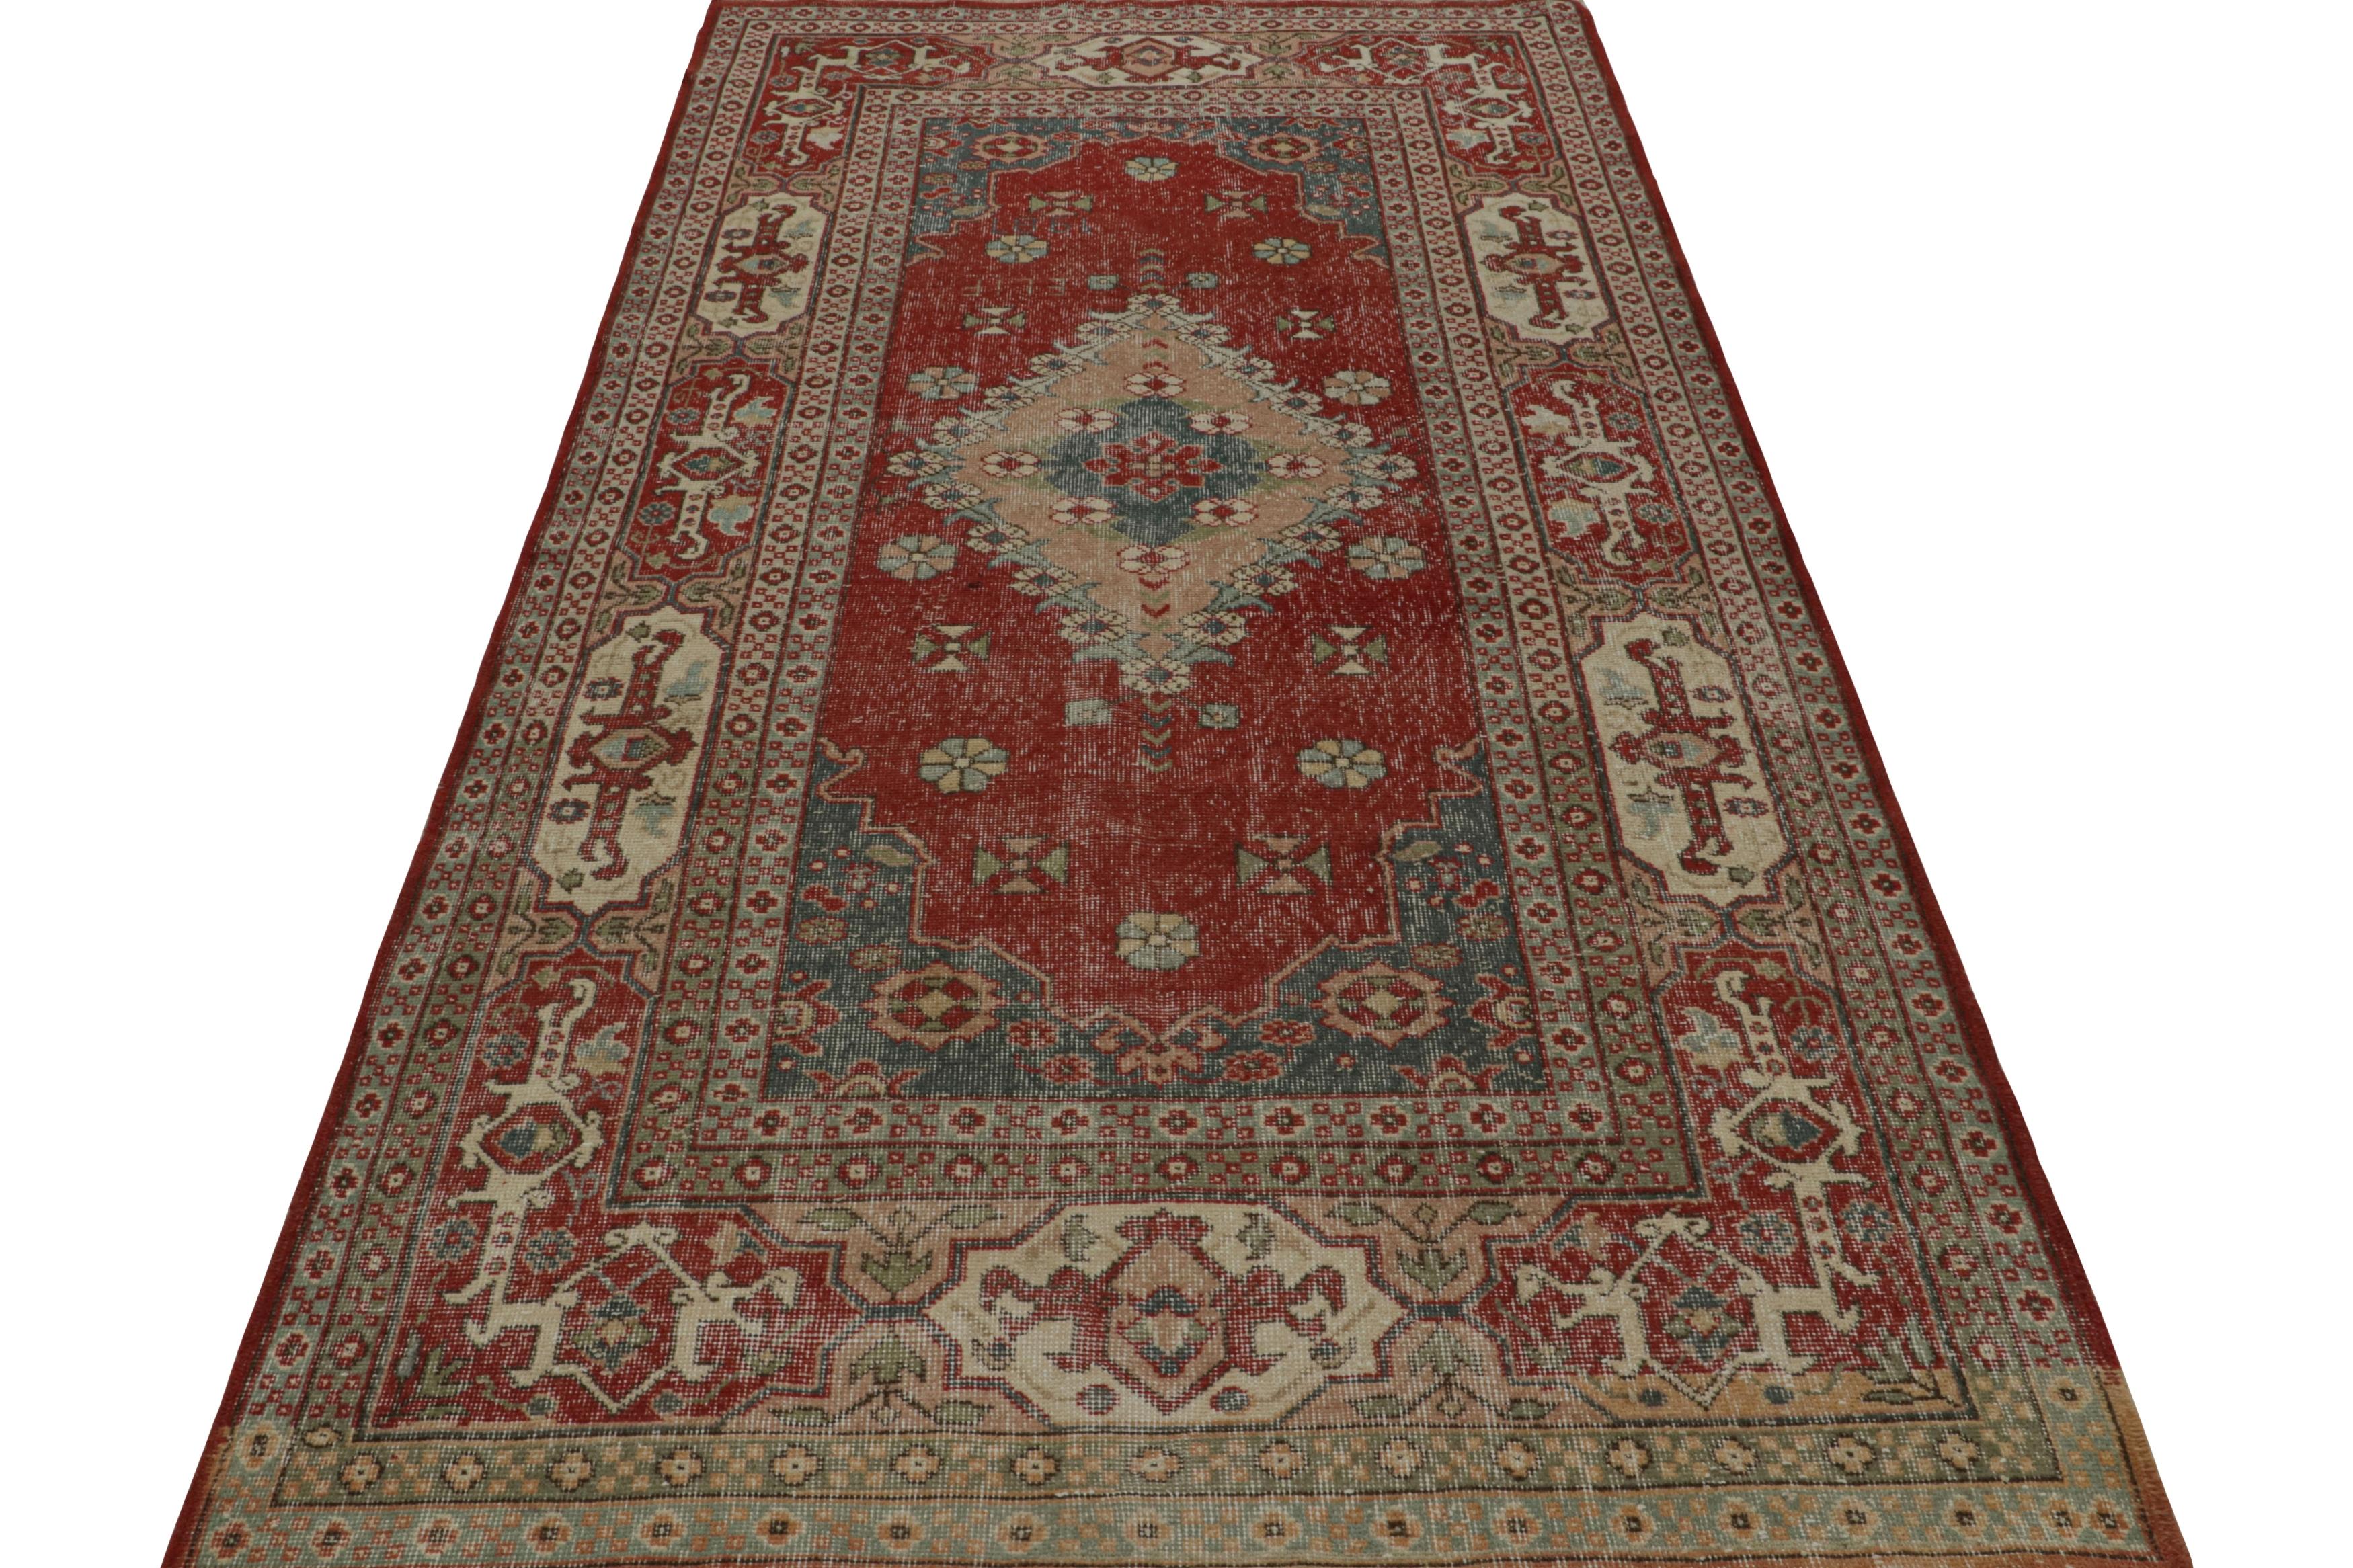 Turkish Vintage Zeki Muren Persian-inspired rug in Beige-Brown, from Rug & Kilim For Sale